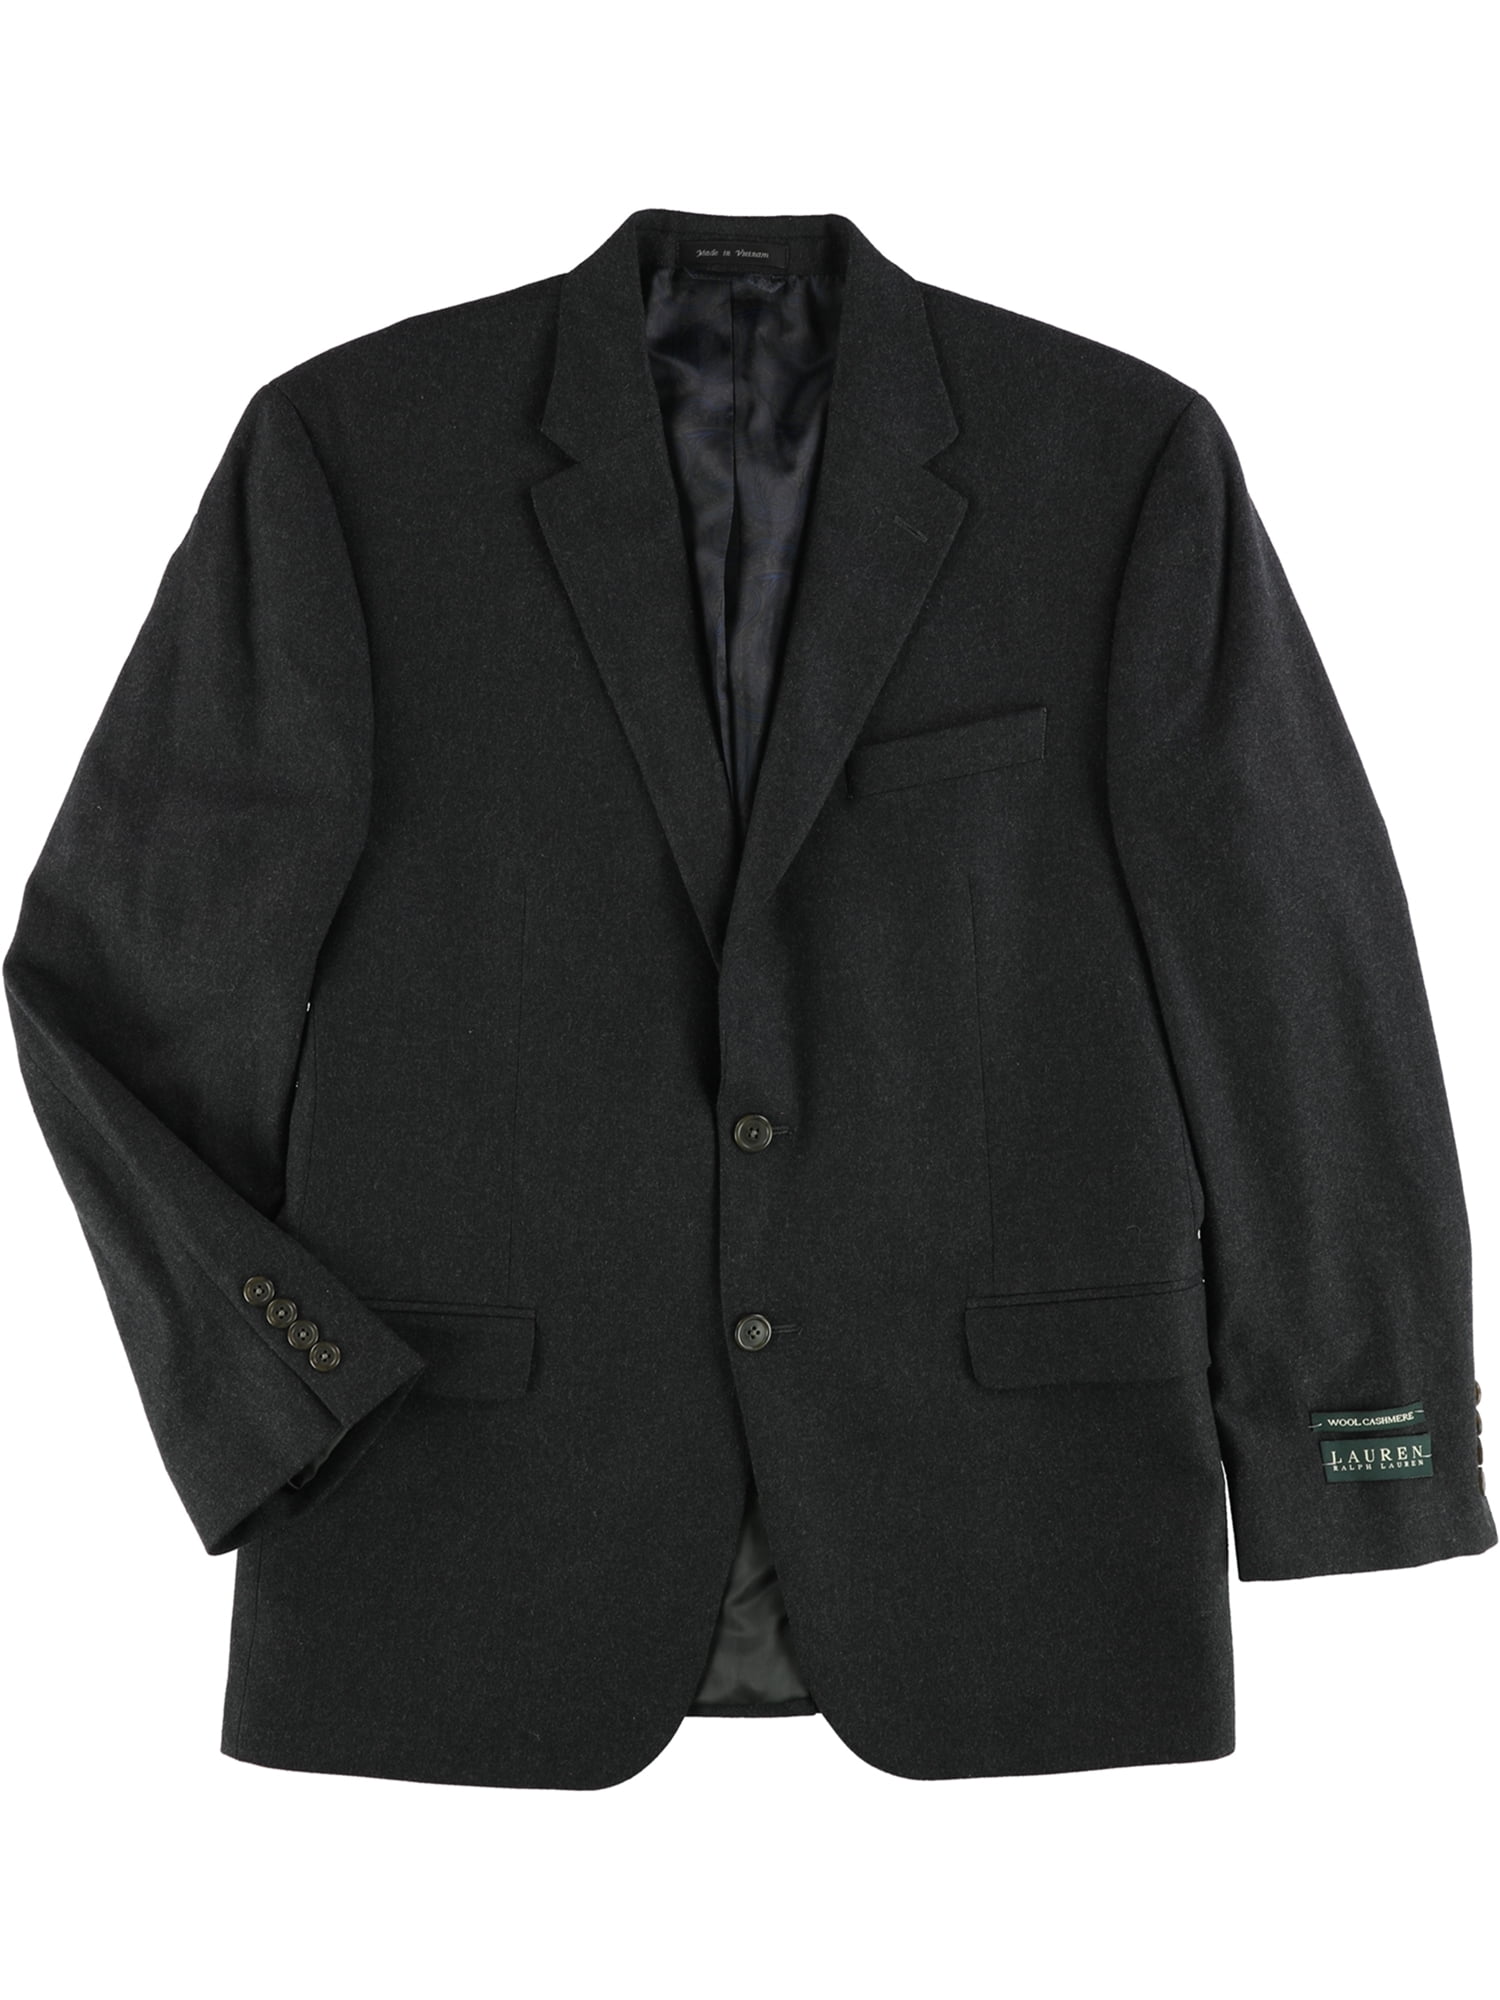 ralph lauren cashmere blend sport coat